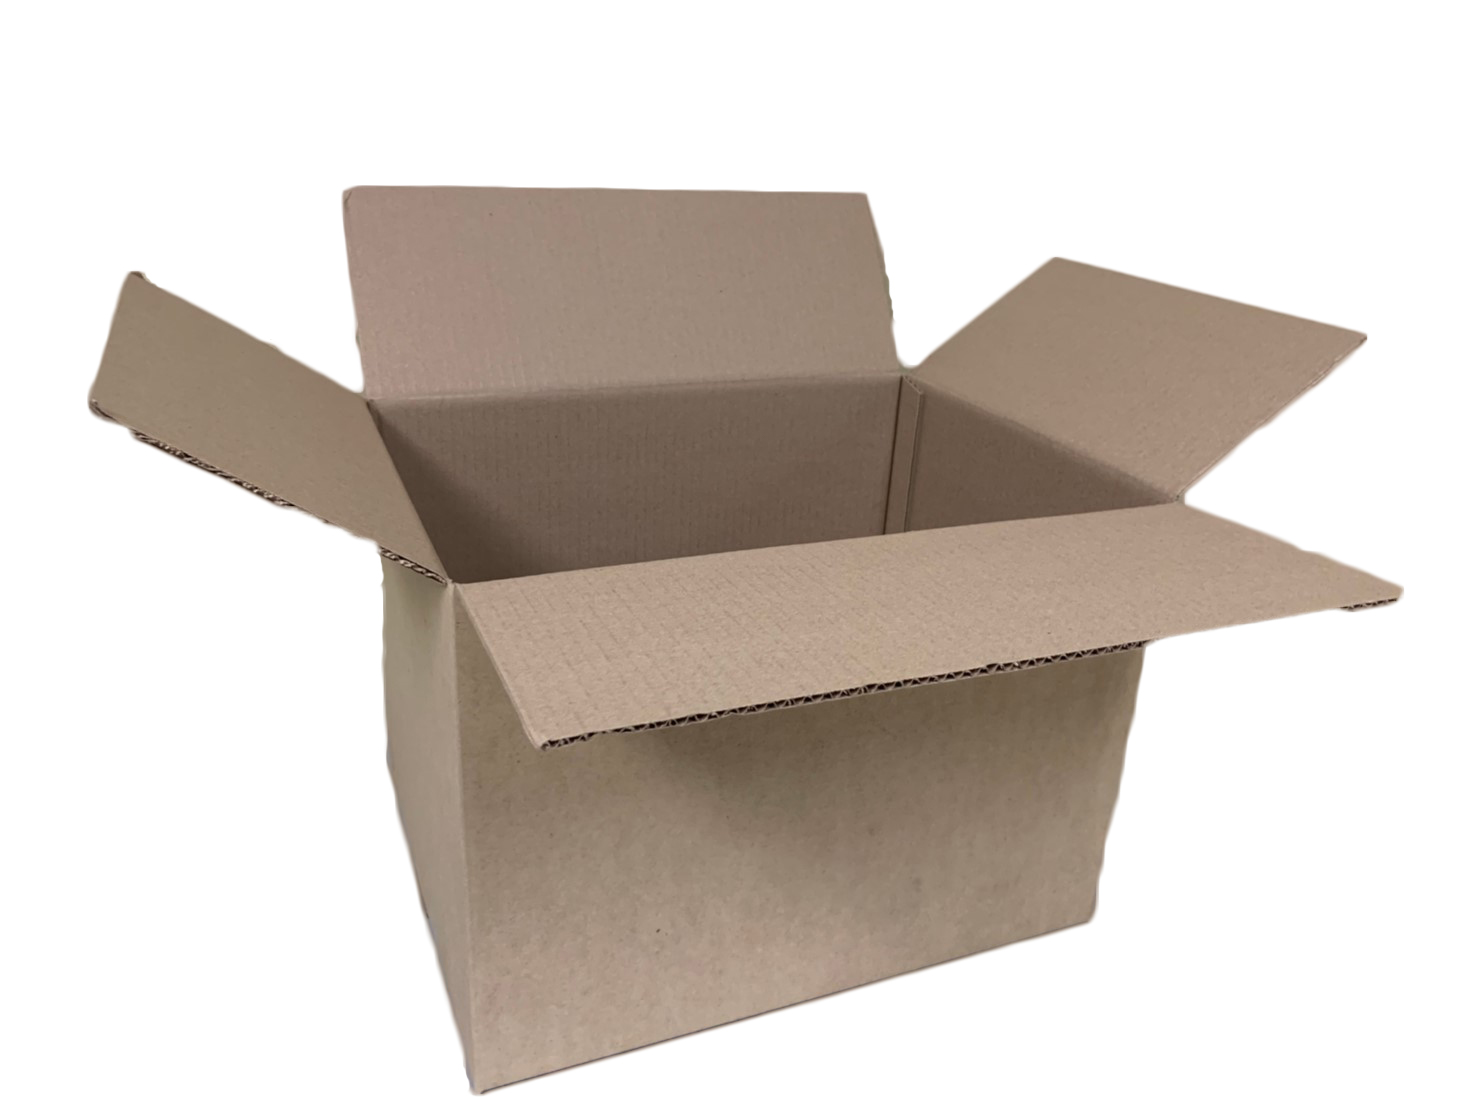 Cardboard box made from KI paper.